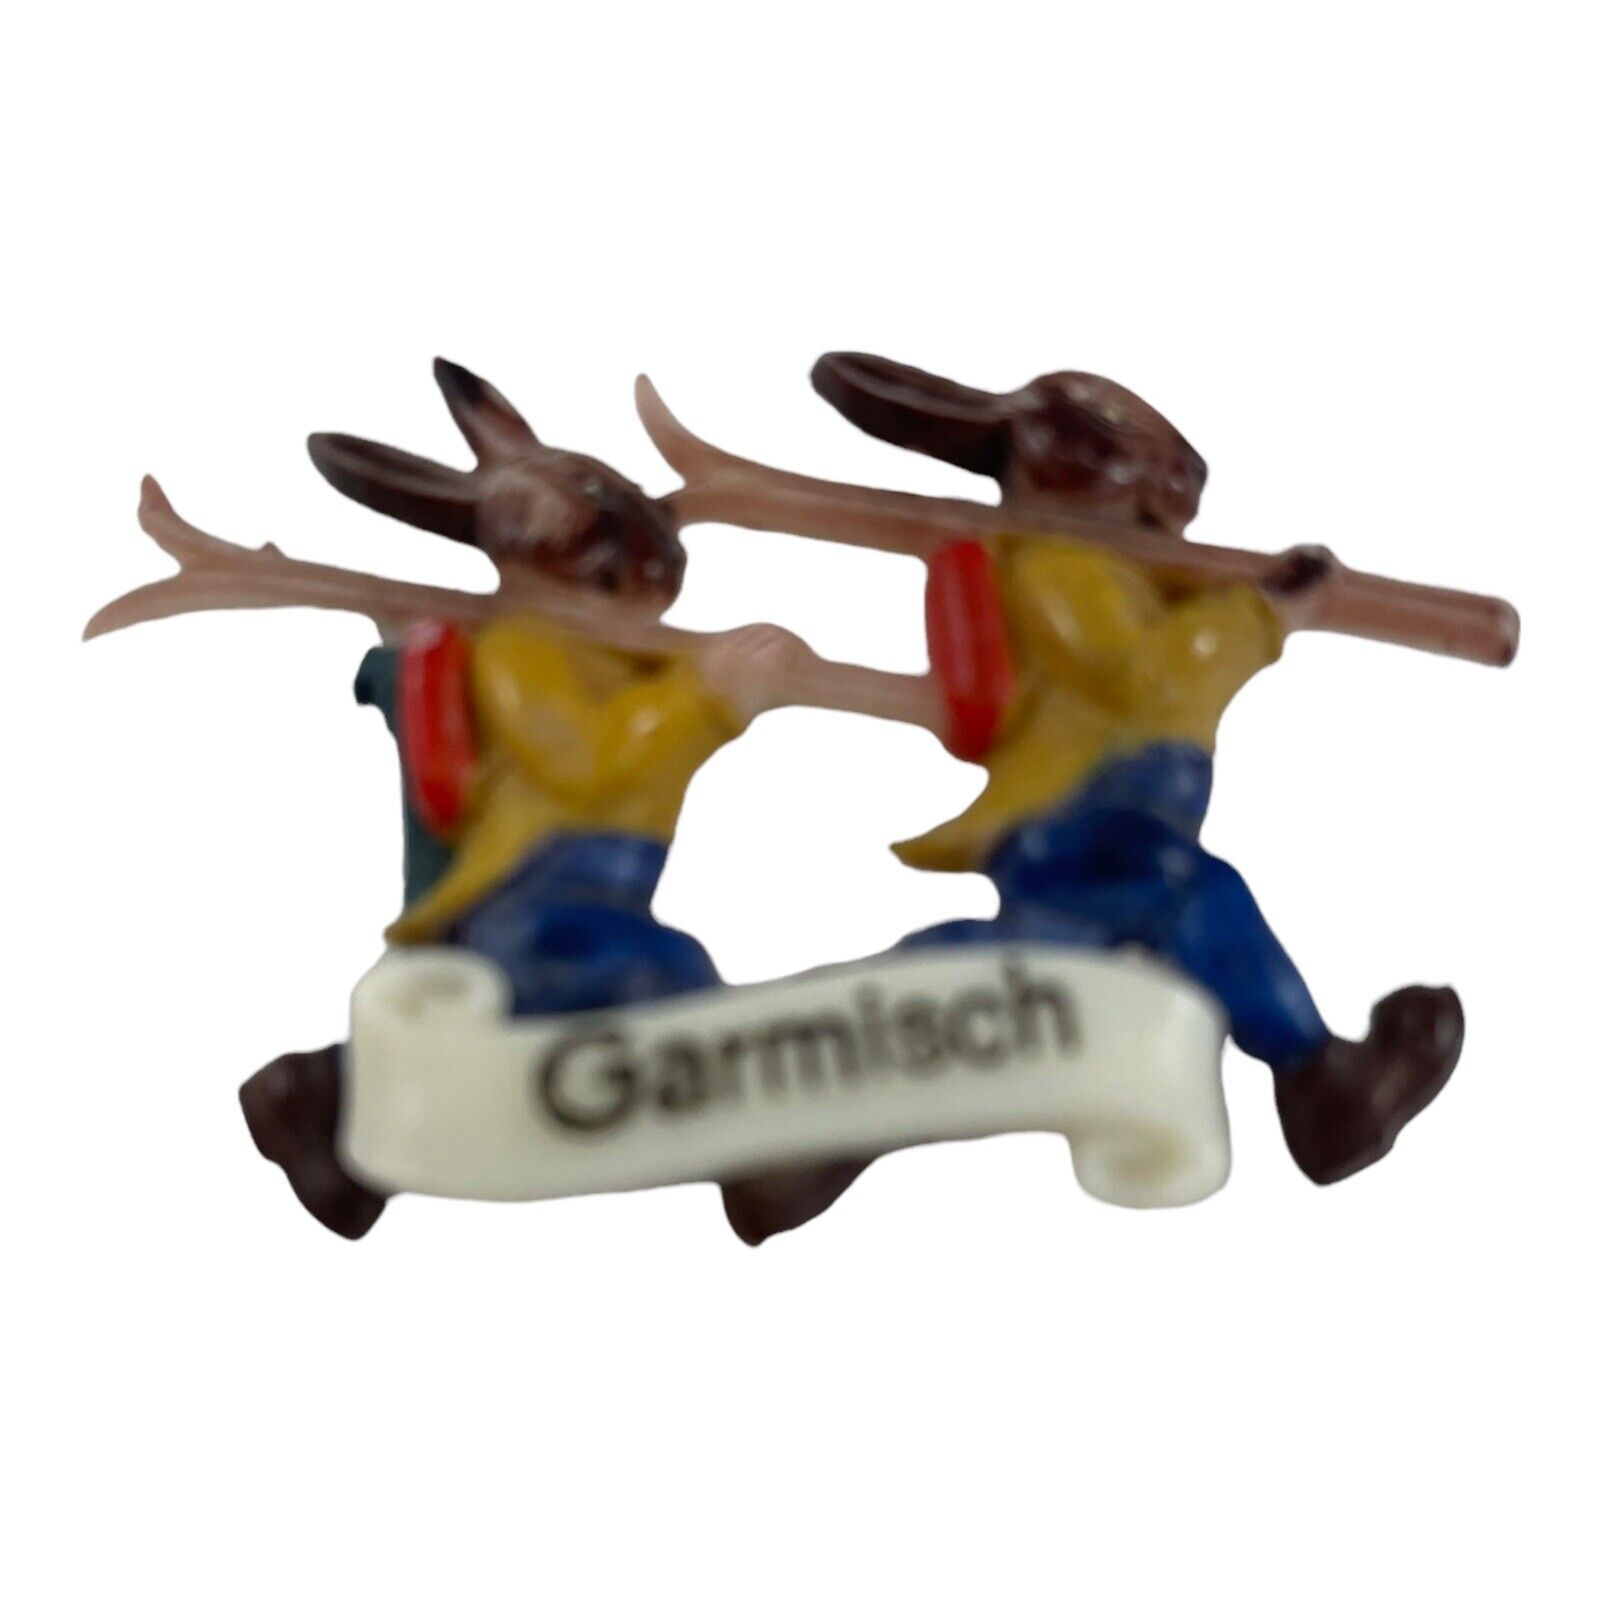 Vintage Plastic Souvenir Pin Garmisch Germany Rabbits Skiing